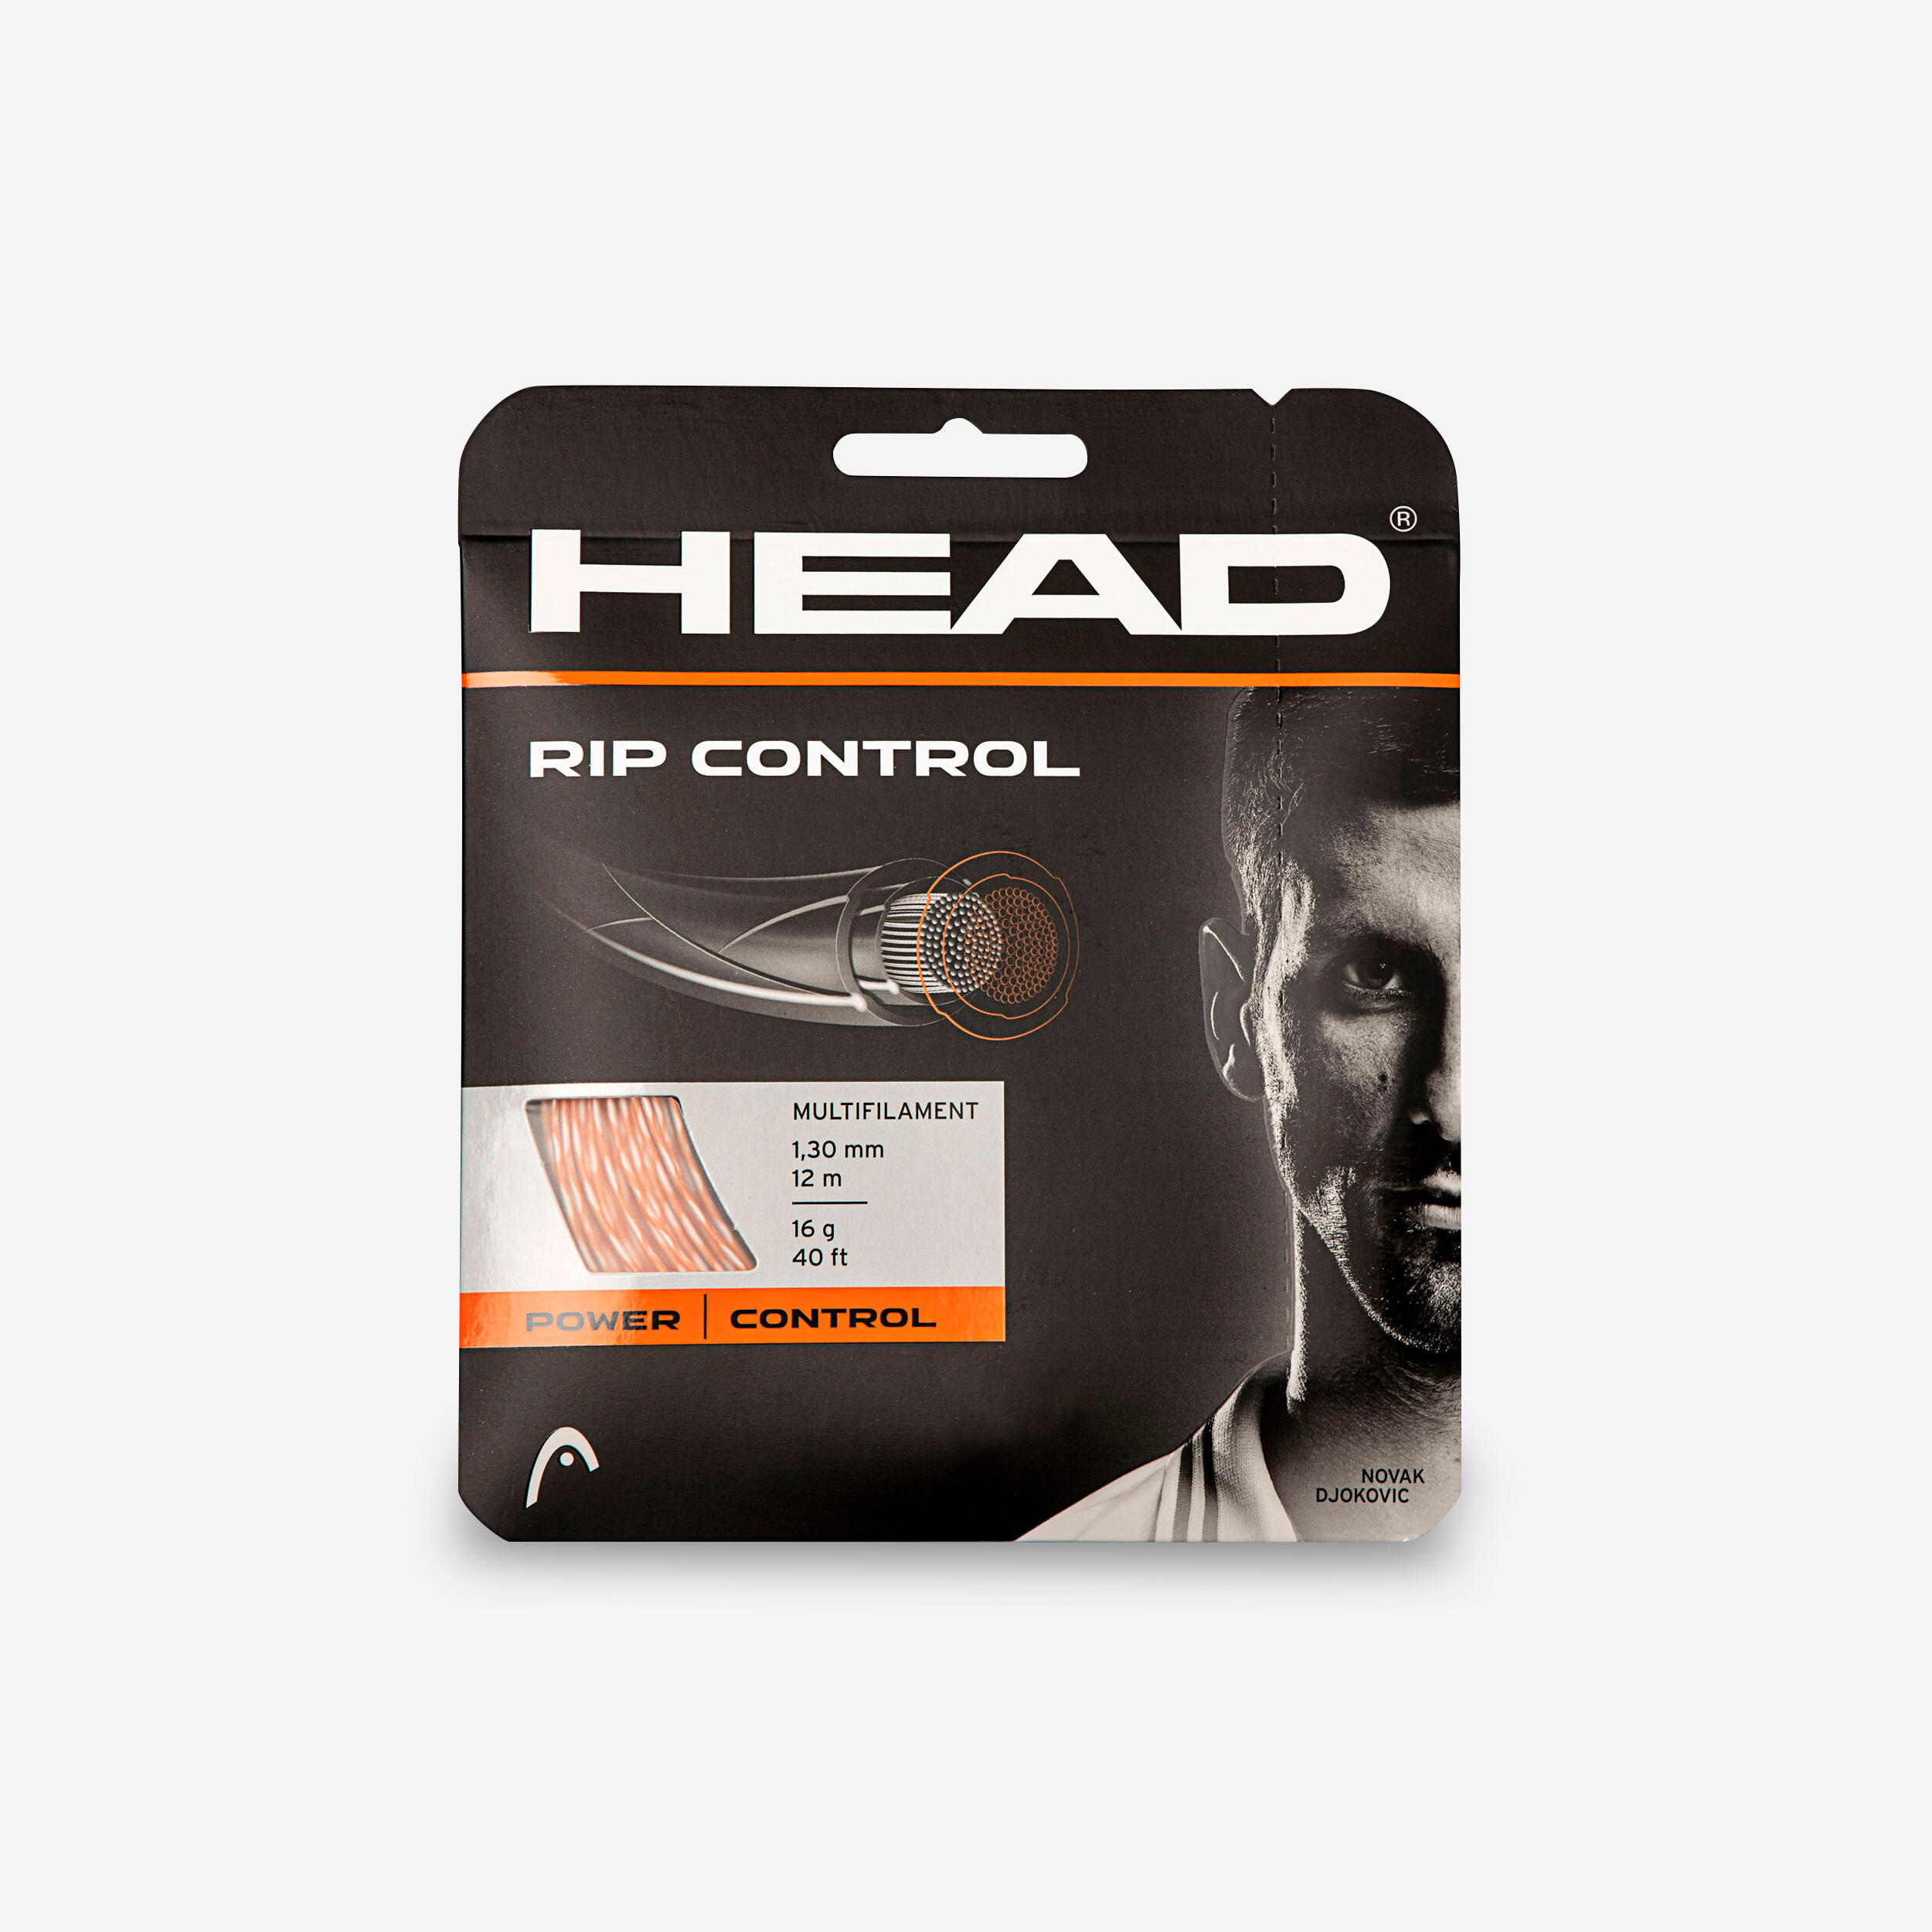 HEAD 1.30 mm Multifilament Tennis String Rip Control - Natural